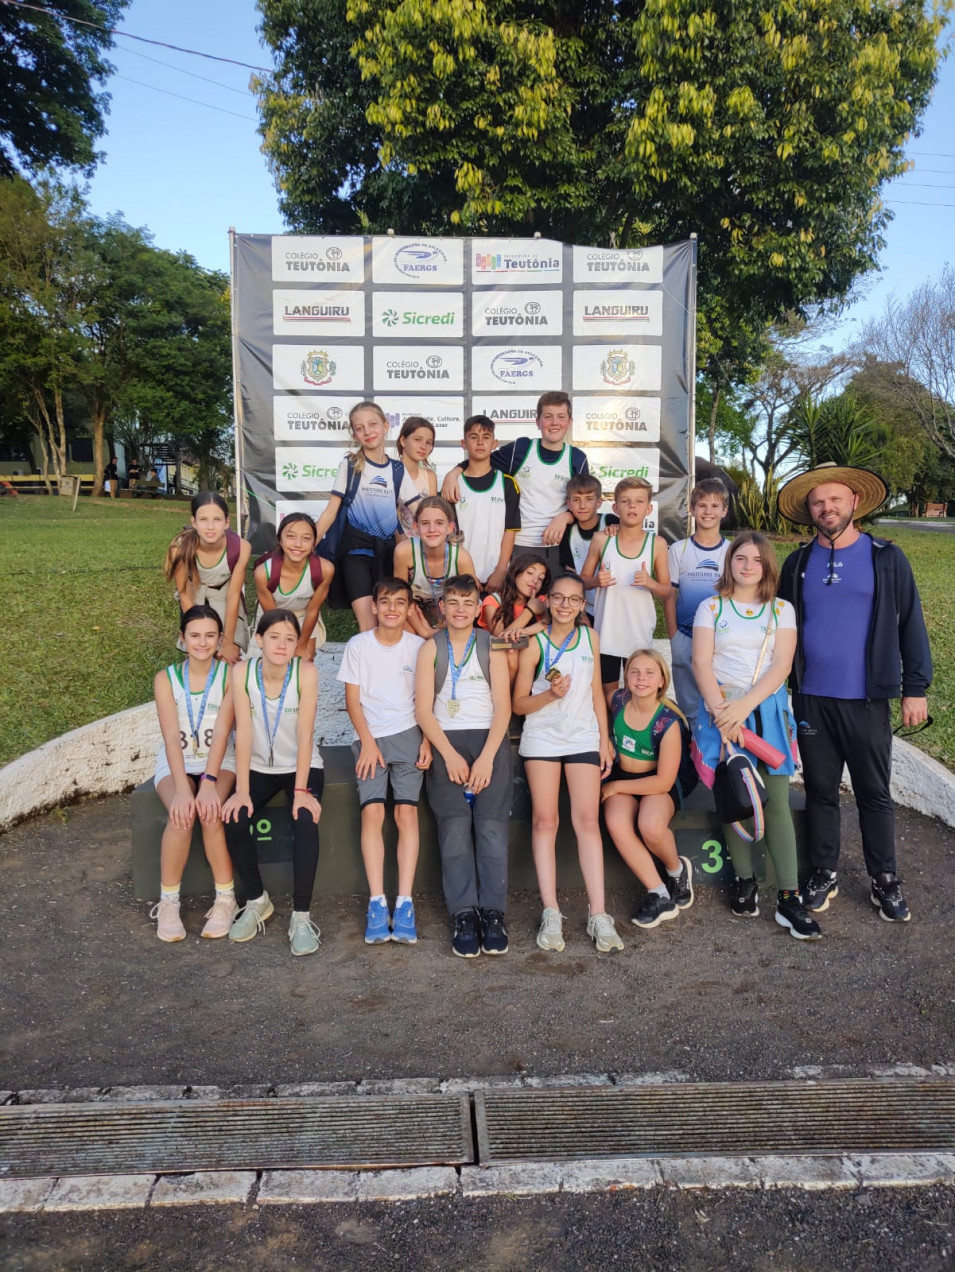 Equipe Municipal de Atletismo/Instituto Ivoti participa de campeonato em Teutônia